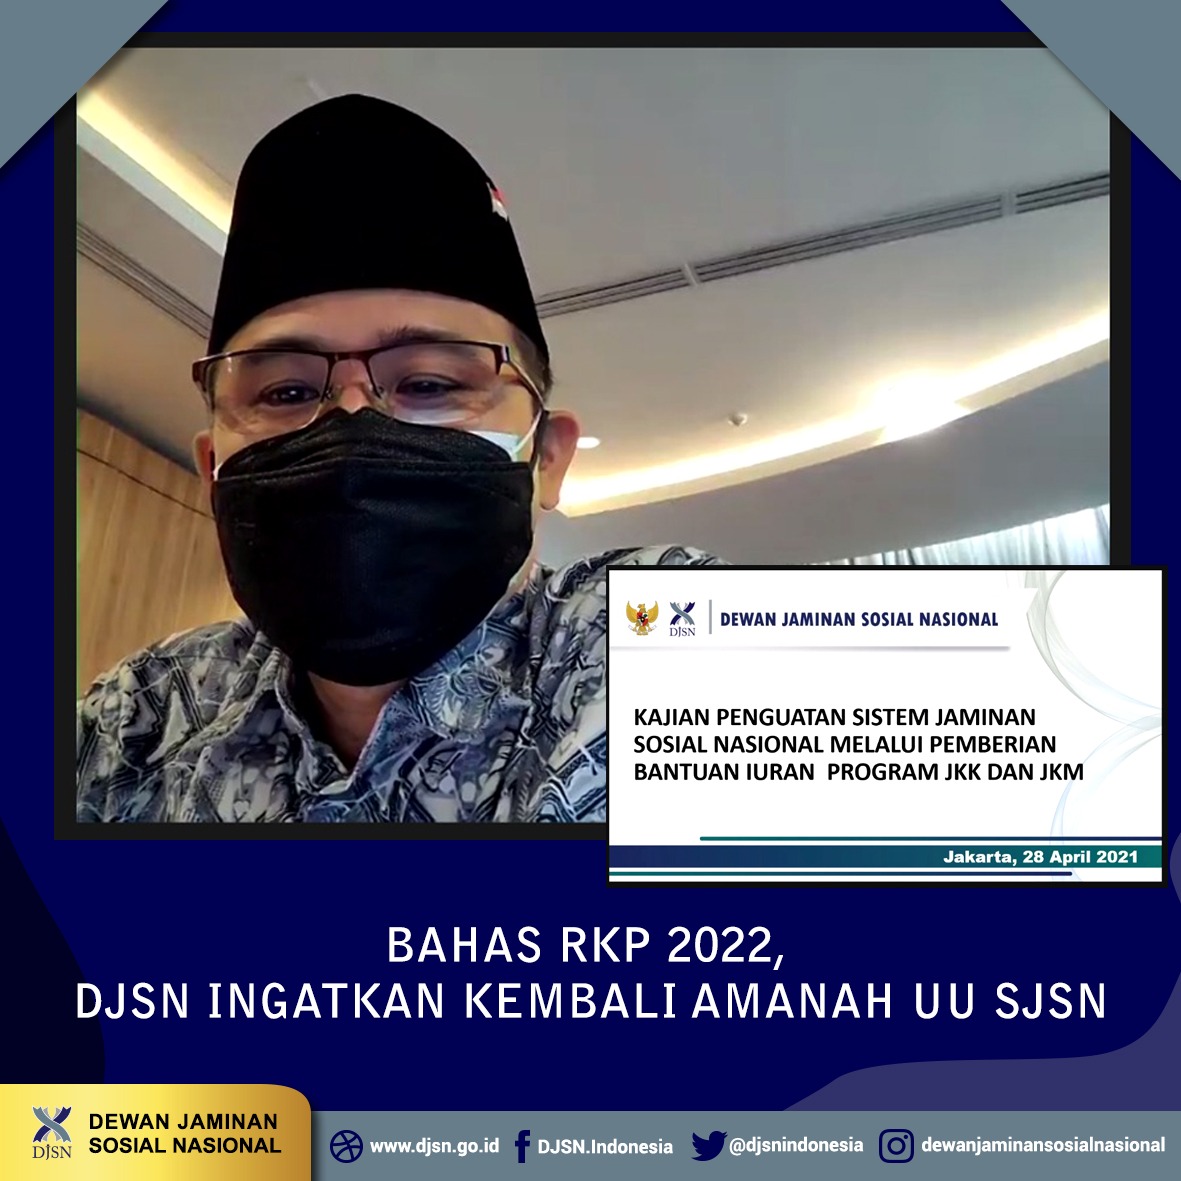 Bahas RKP 2022, DJSN Ingatkan Kembali Amanah UU SJSN